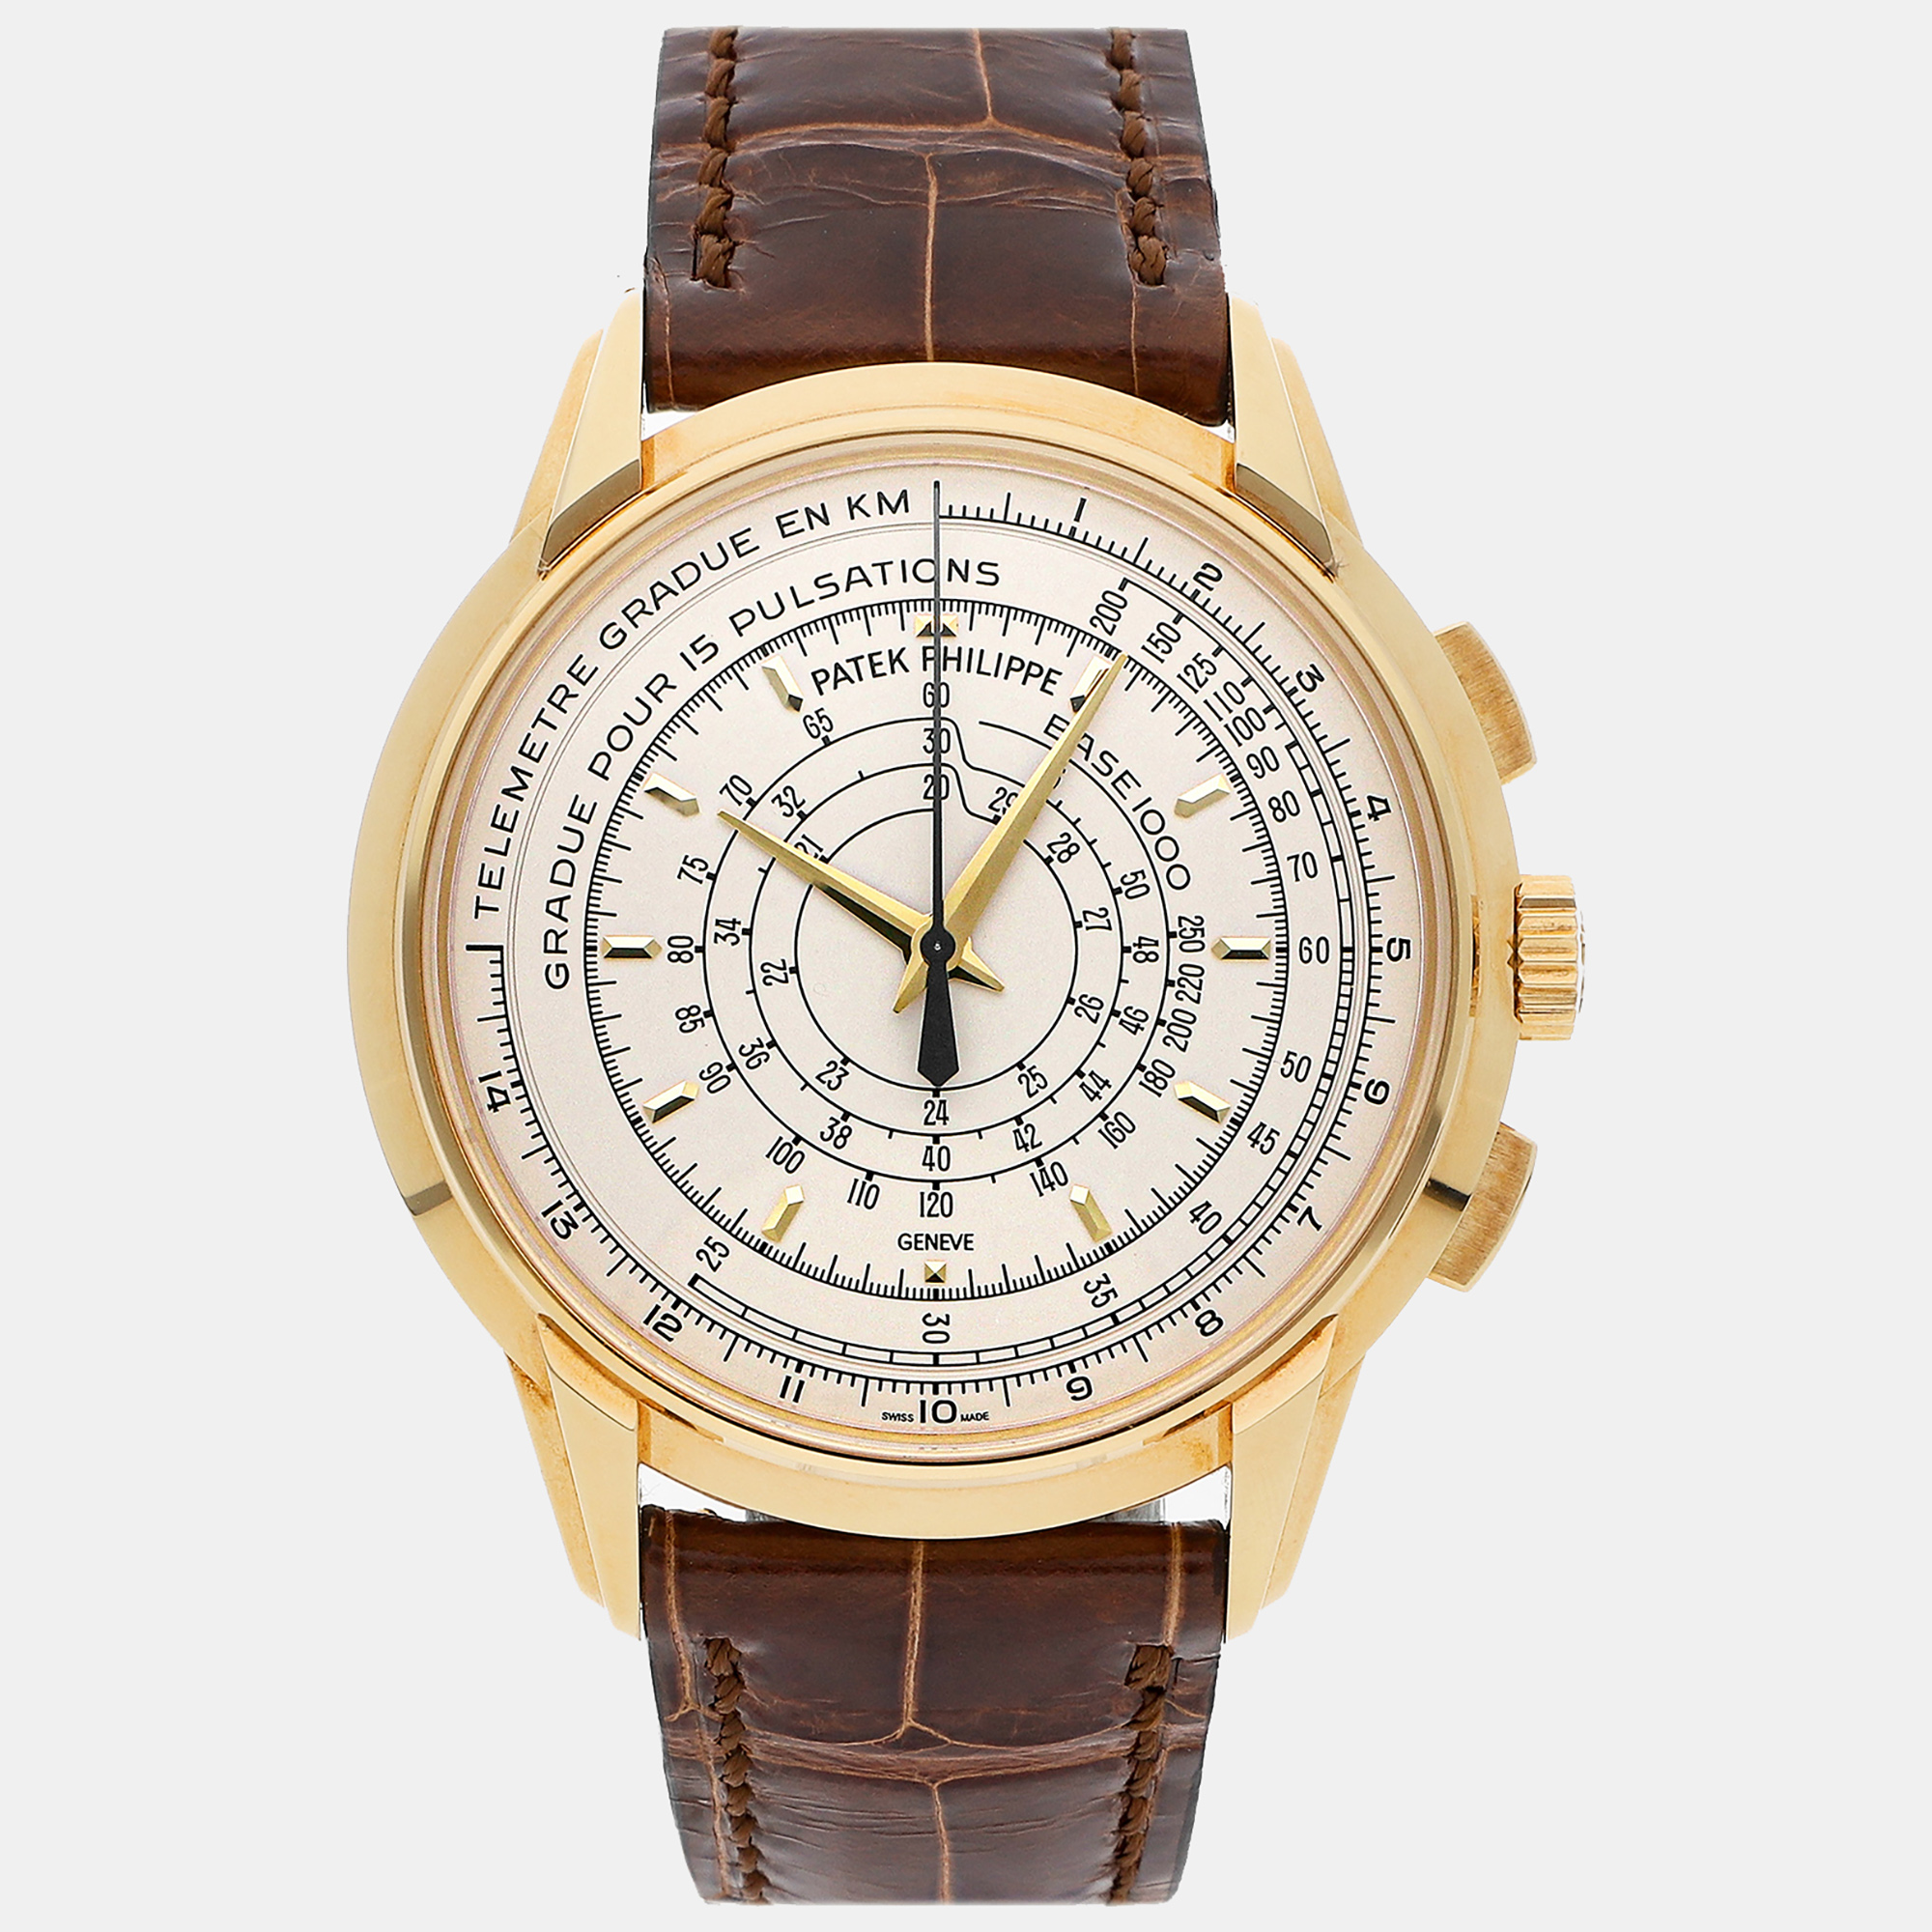 Patek philippe silver 18k yellow gold chronograph 5975j-001 automatic men's wristwatch 40 mm